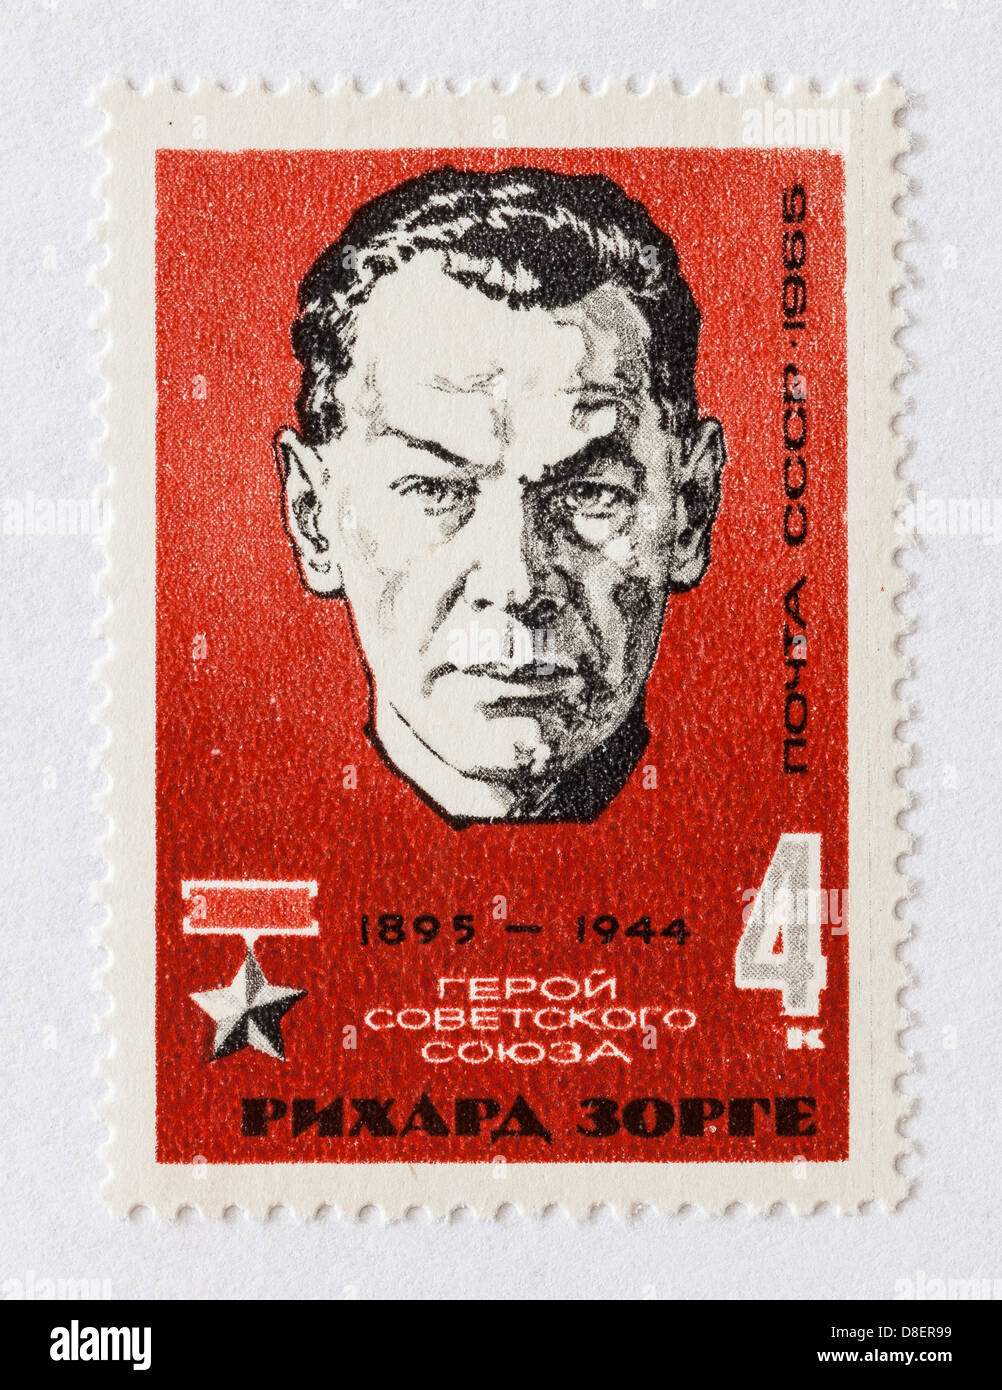 Soviet spy Richard Sorge featured on a commemorative Soviet Union post stamp. Stock Photo